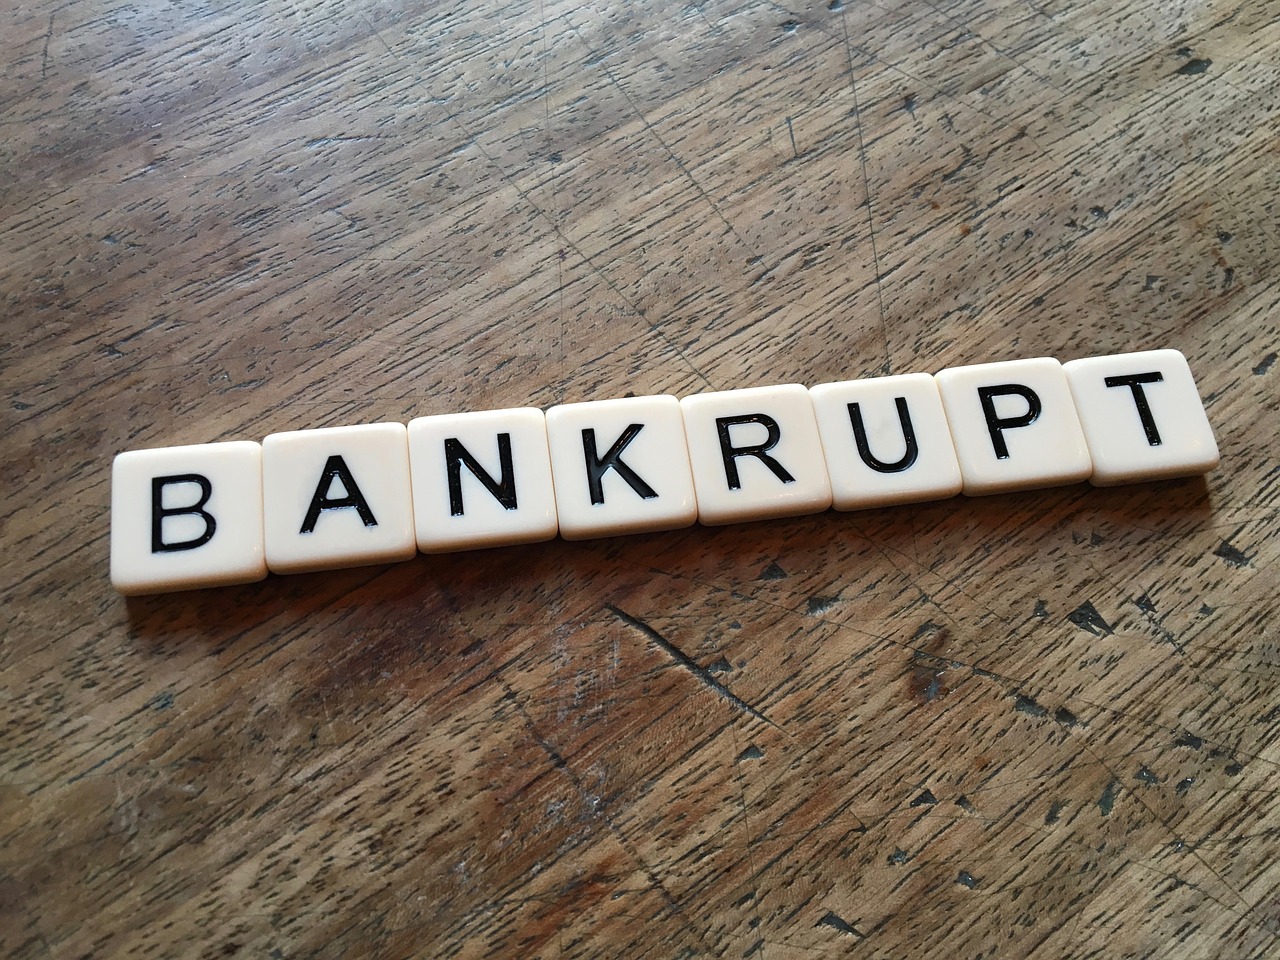 Scrabble letters that spell "bankrupt".